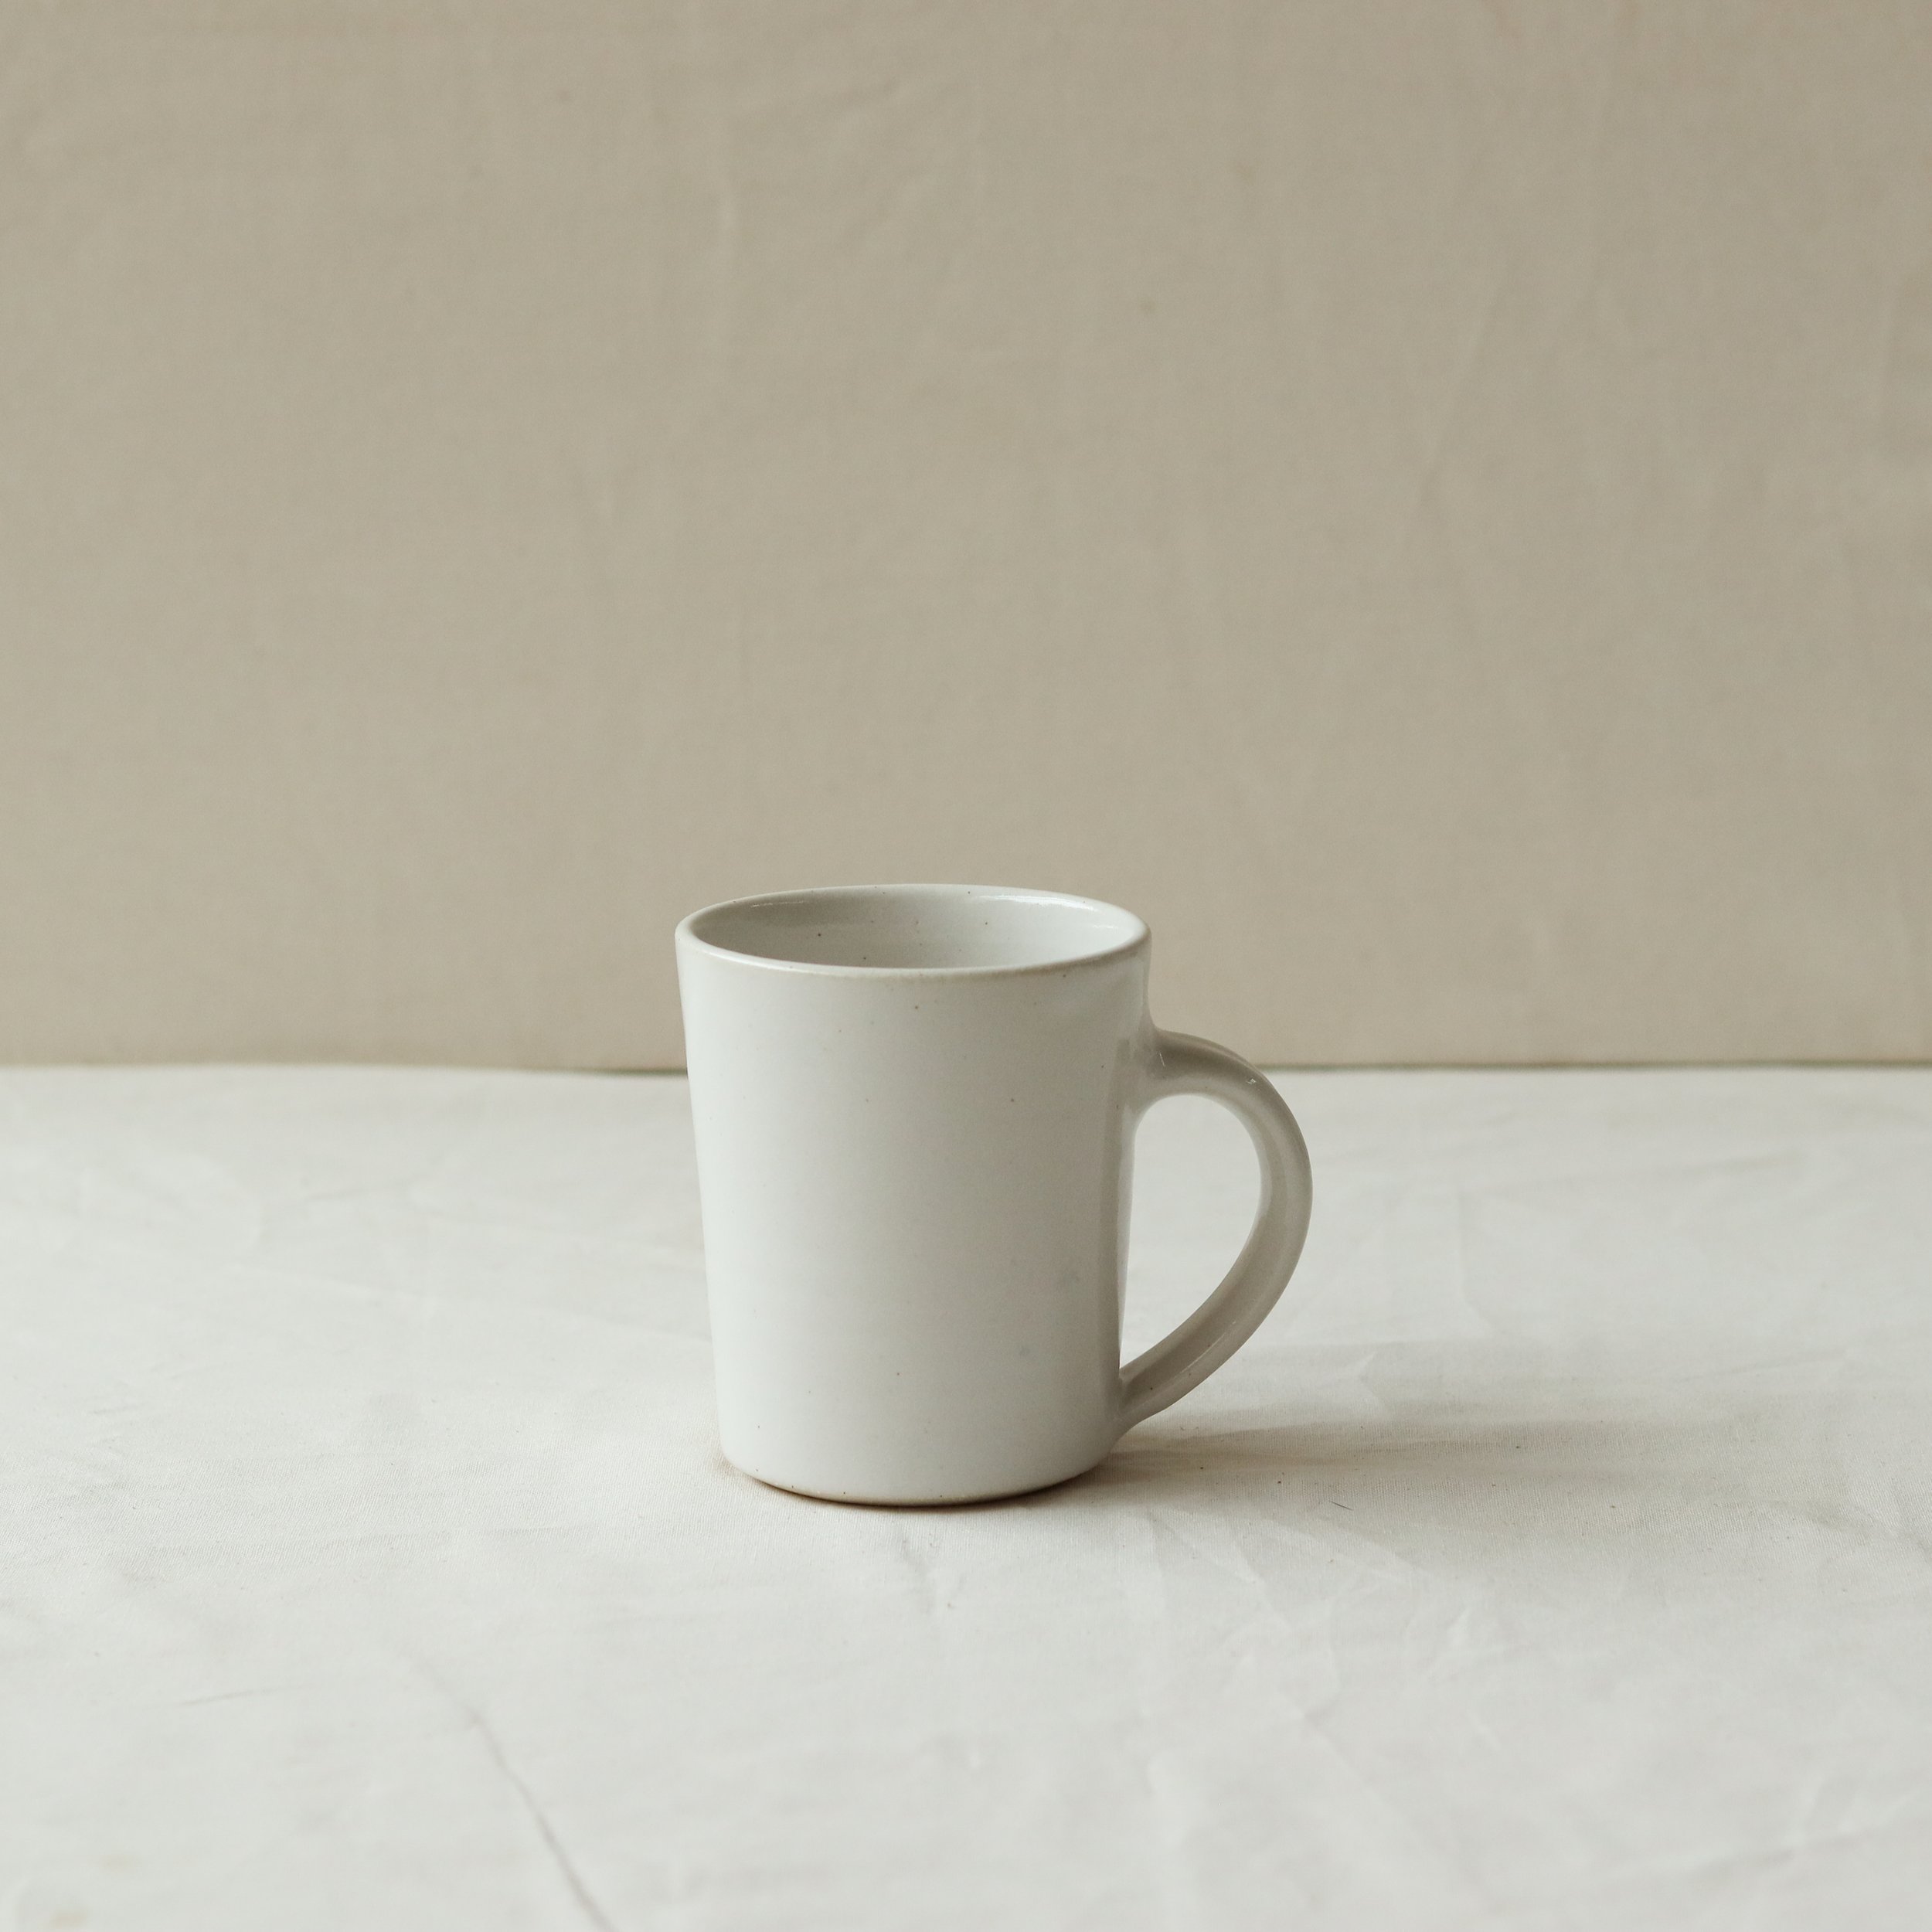 250ml Tapered Mug in Speckled White, Pale Stoneware-5.jpg